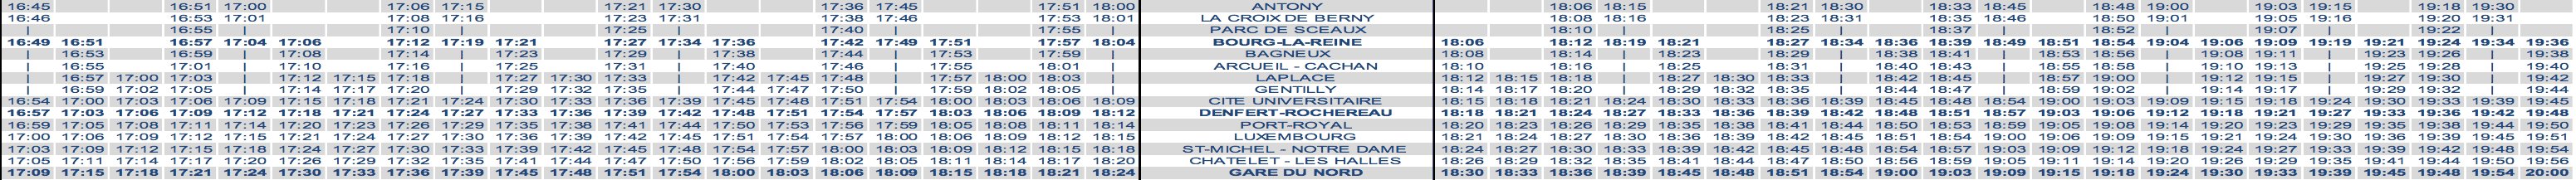 RER B Train Timetable Antony (ORY) to Paris Afternoon Weekday 2020 Strike